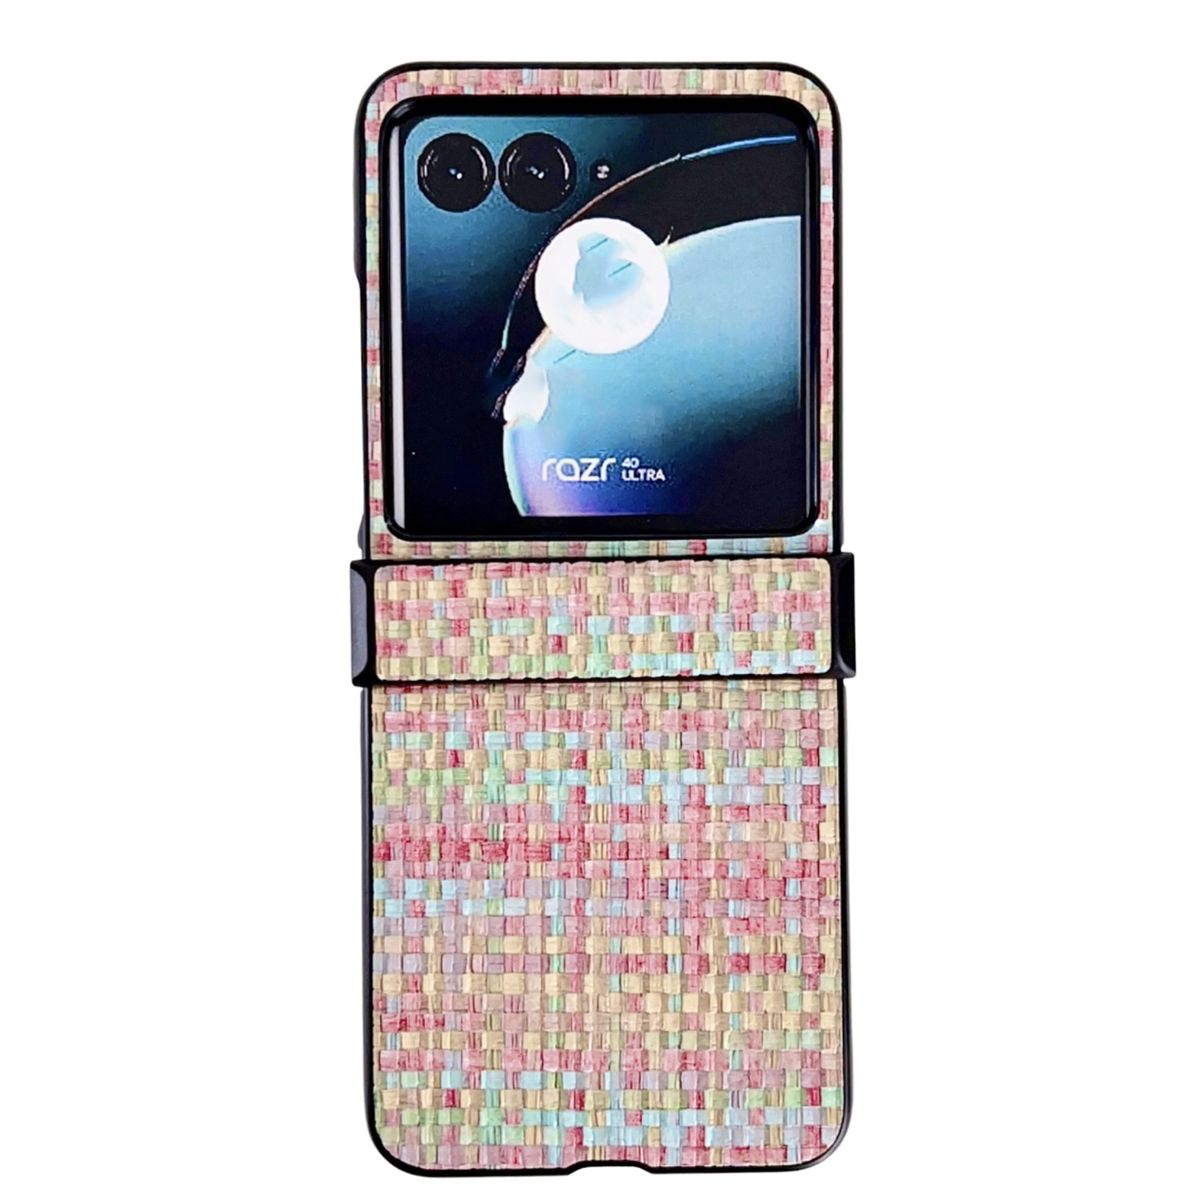 KÖNIG DESIGN Case, Backcover, 40 Motorola, Farben Ultra, Razr